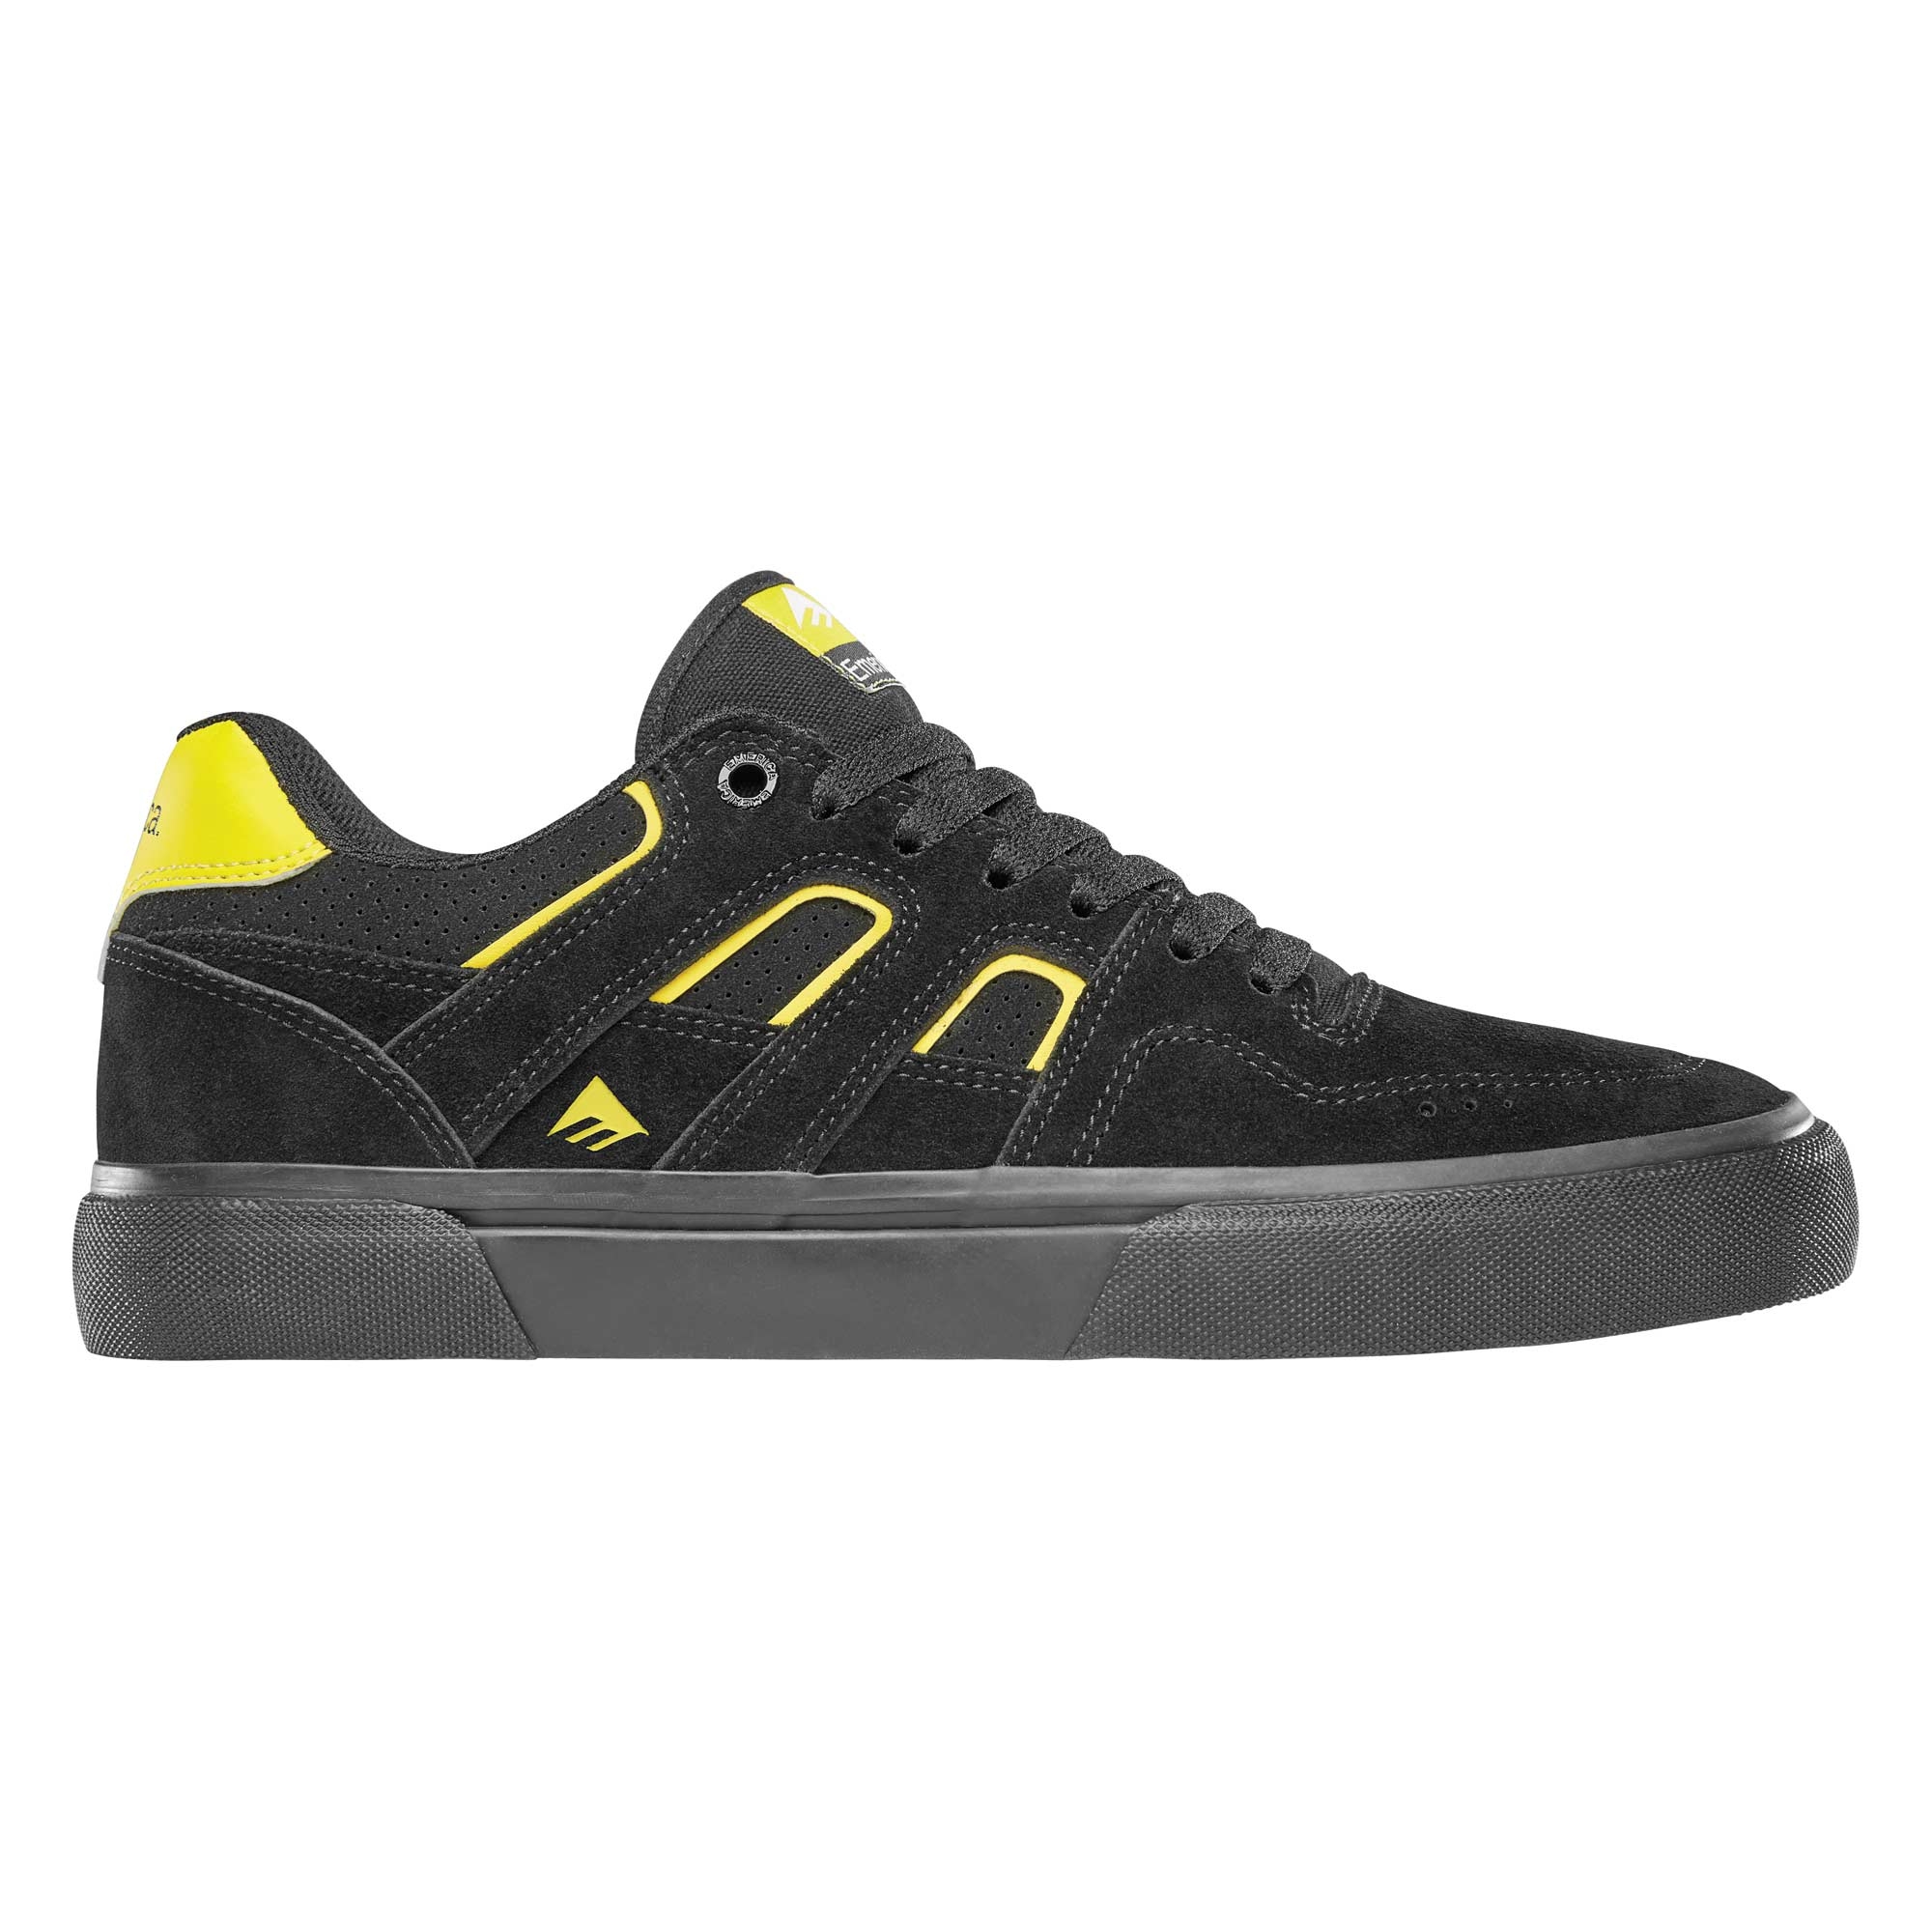 EMERICA Shoe TILT G6 VULC bla/yel/bla black/yellow/black